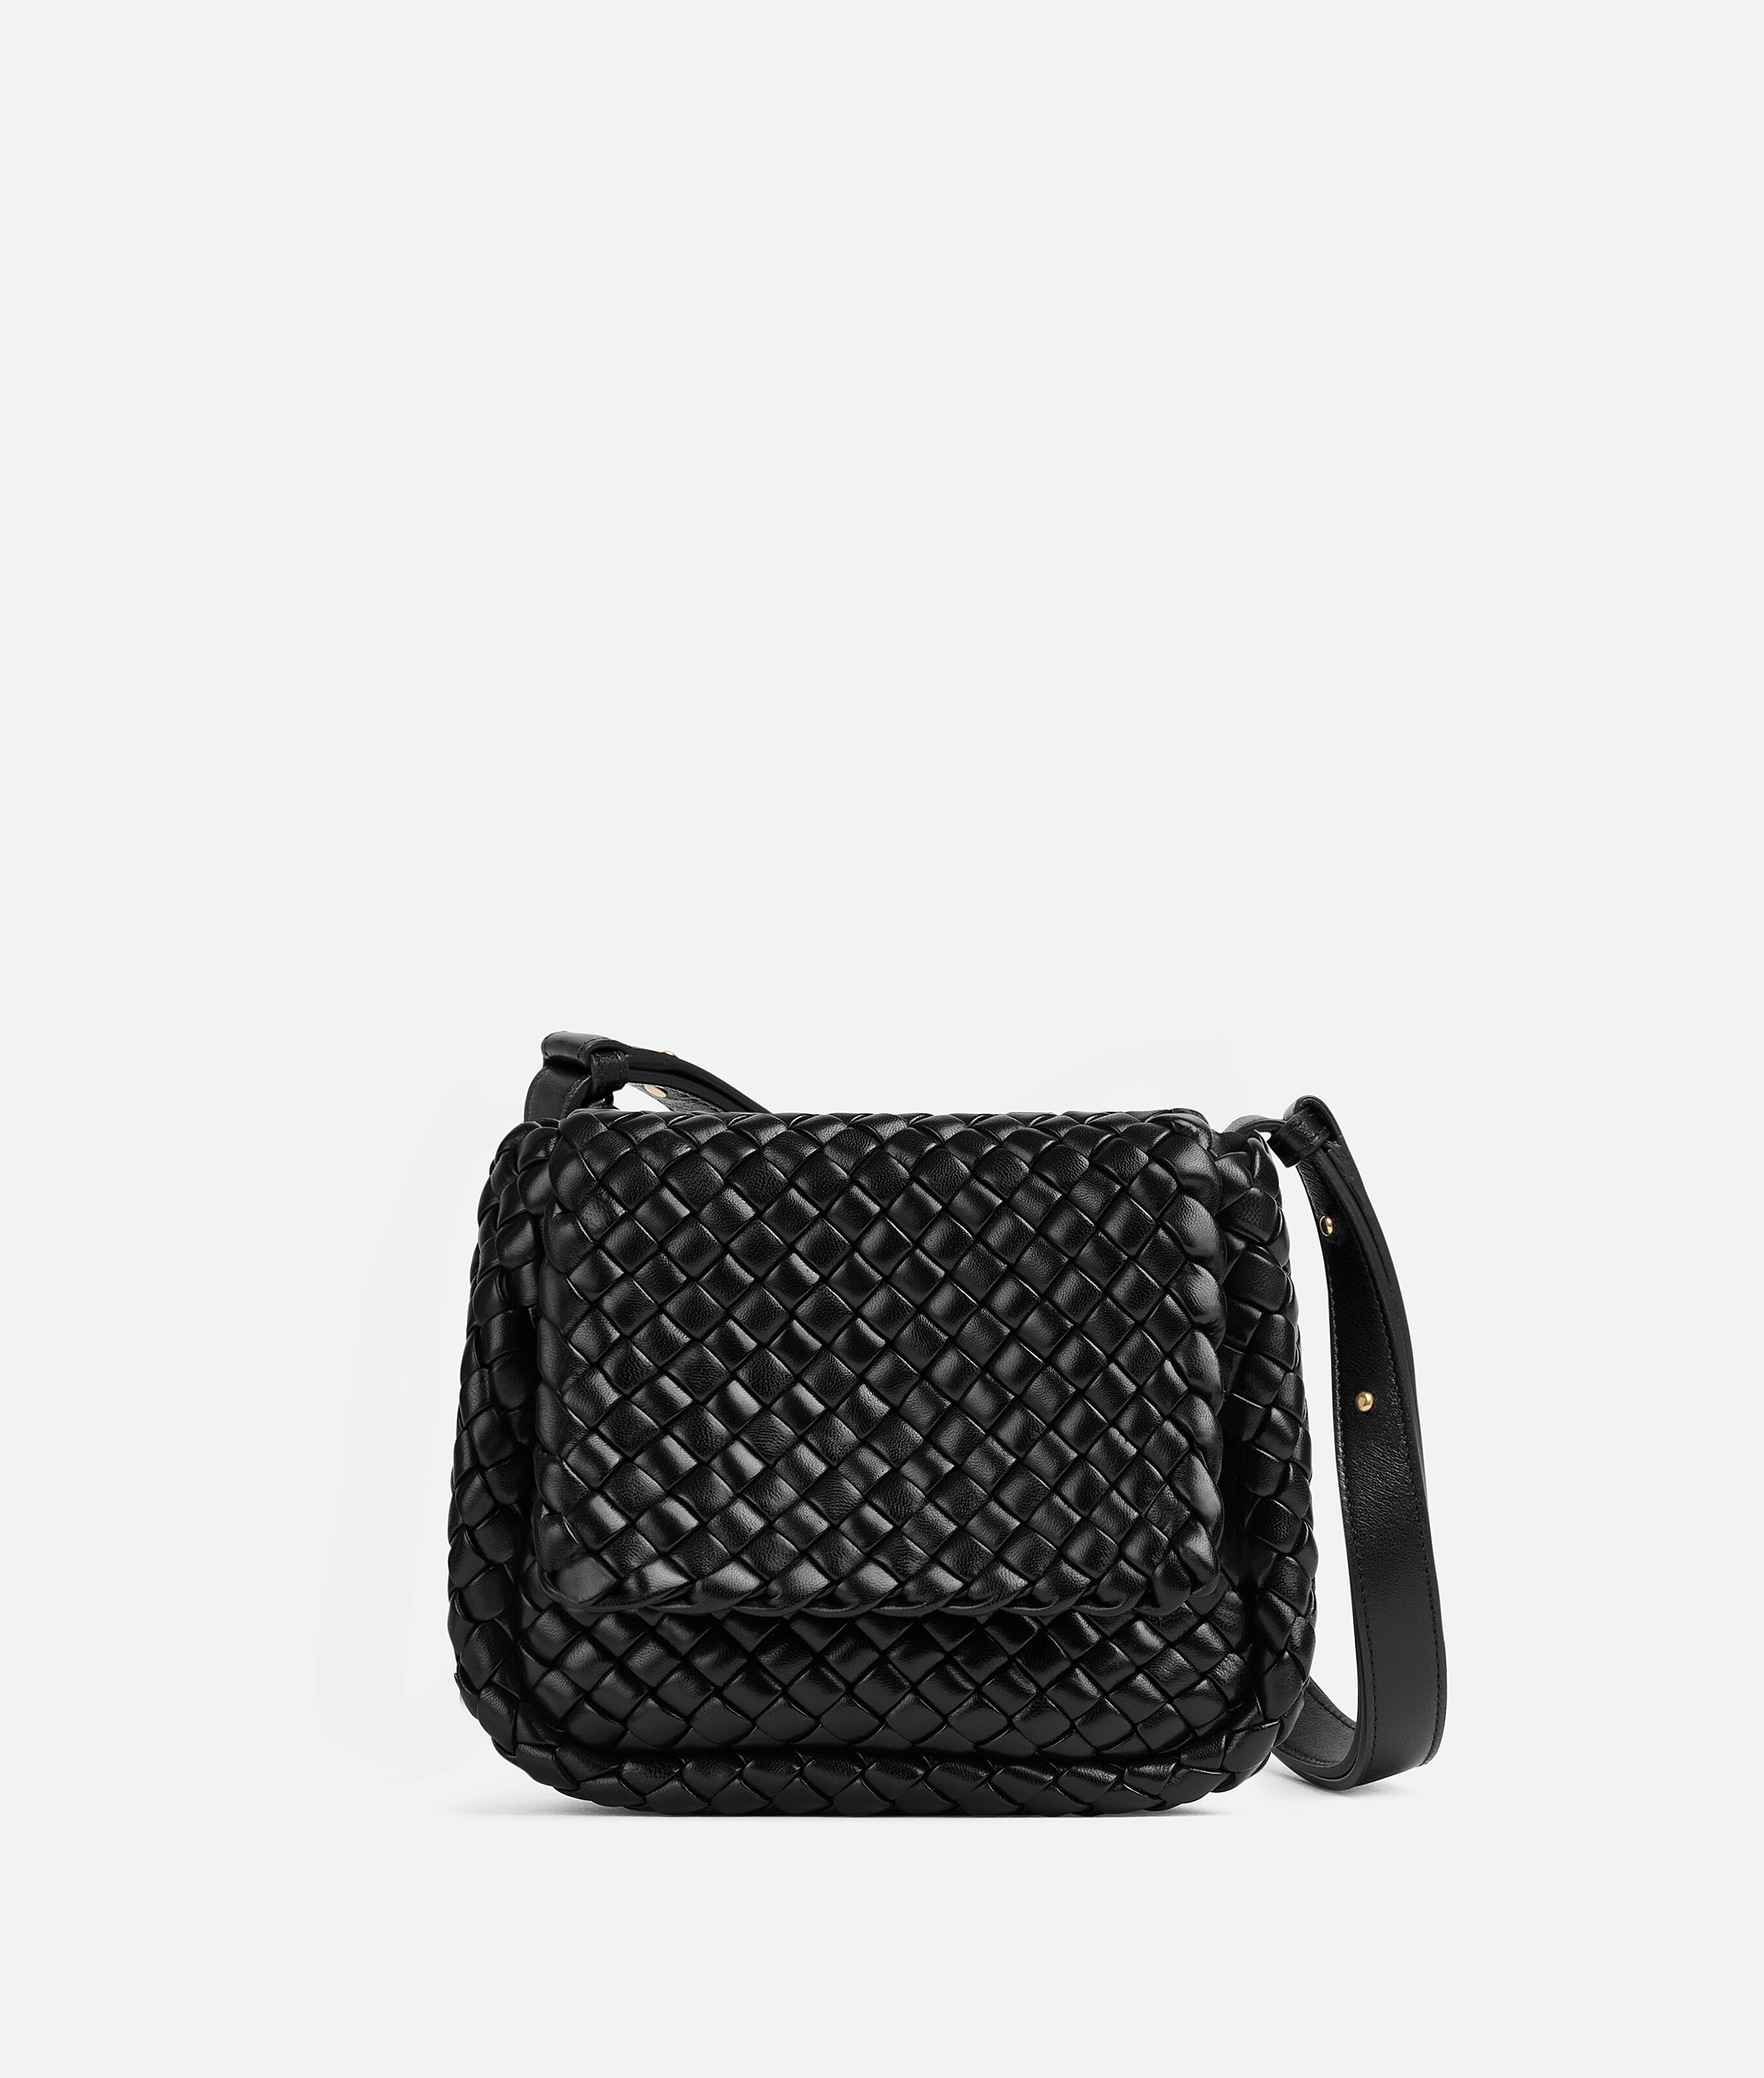 Bottega Veneta® Small Intrecciato Bucket Bag in Black. Shop online now.